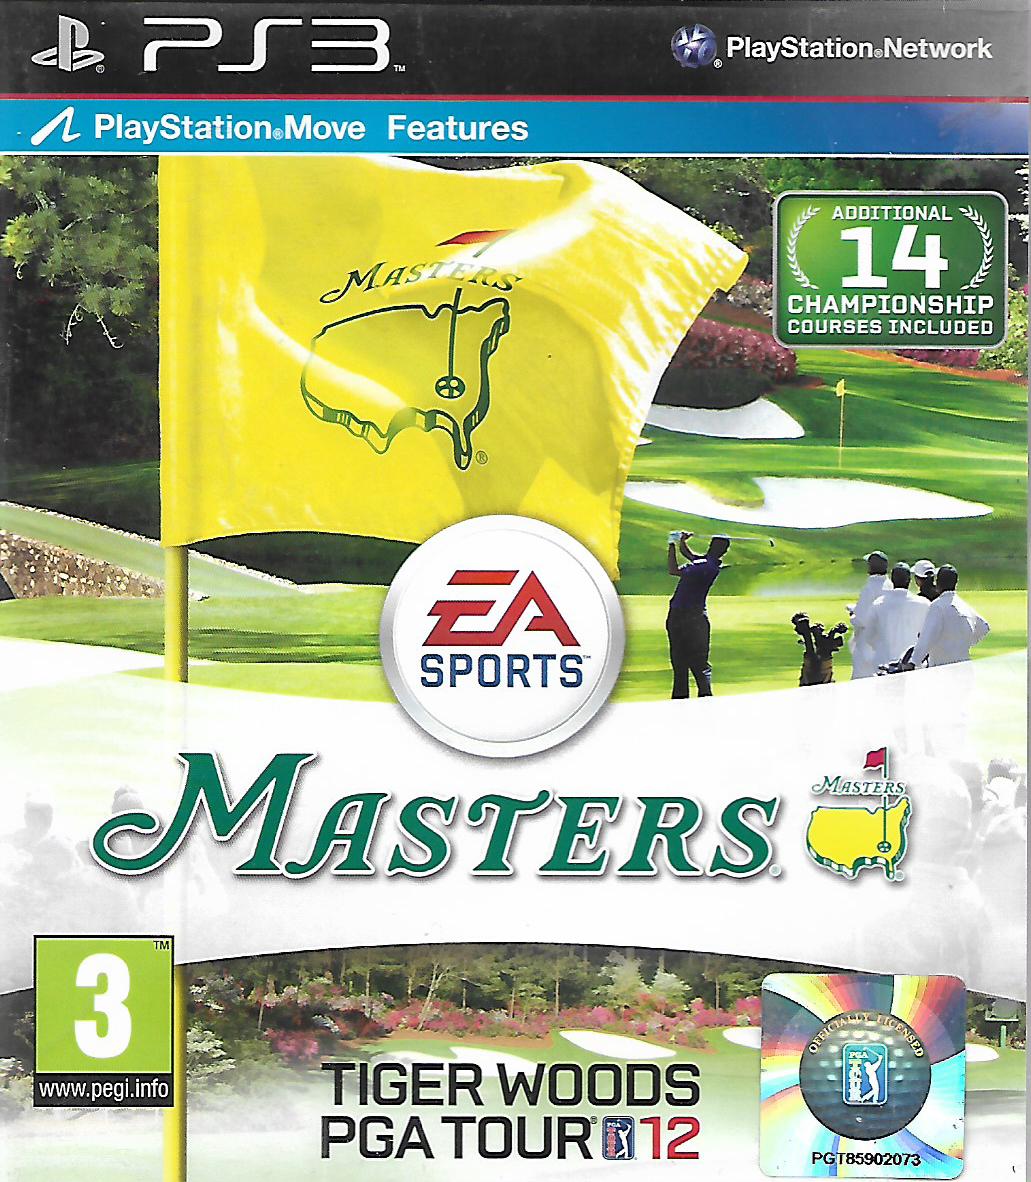 TIGER WOODS PGA TOUR 12 - MASTERS (PS3 - bazar)